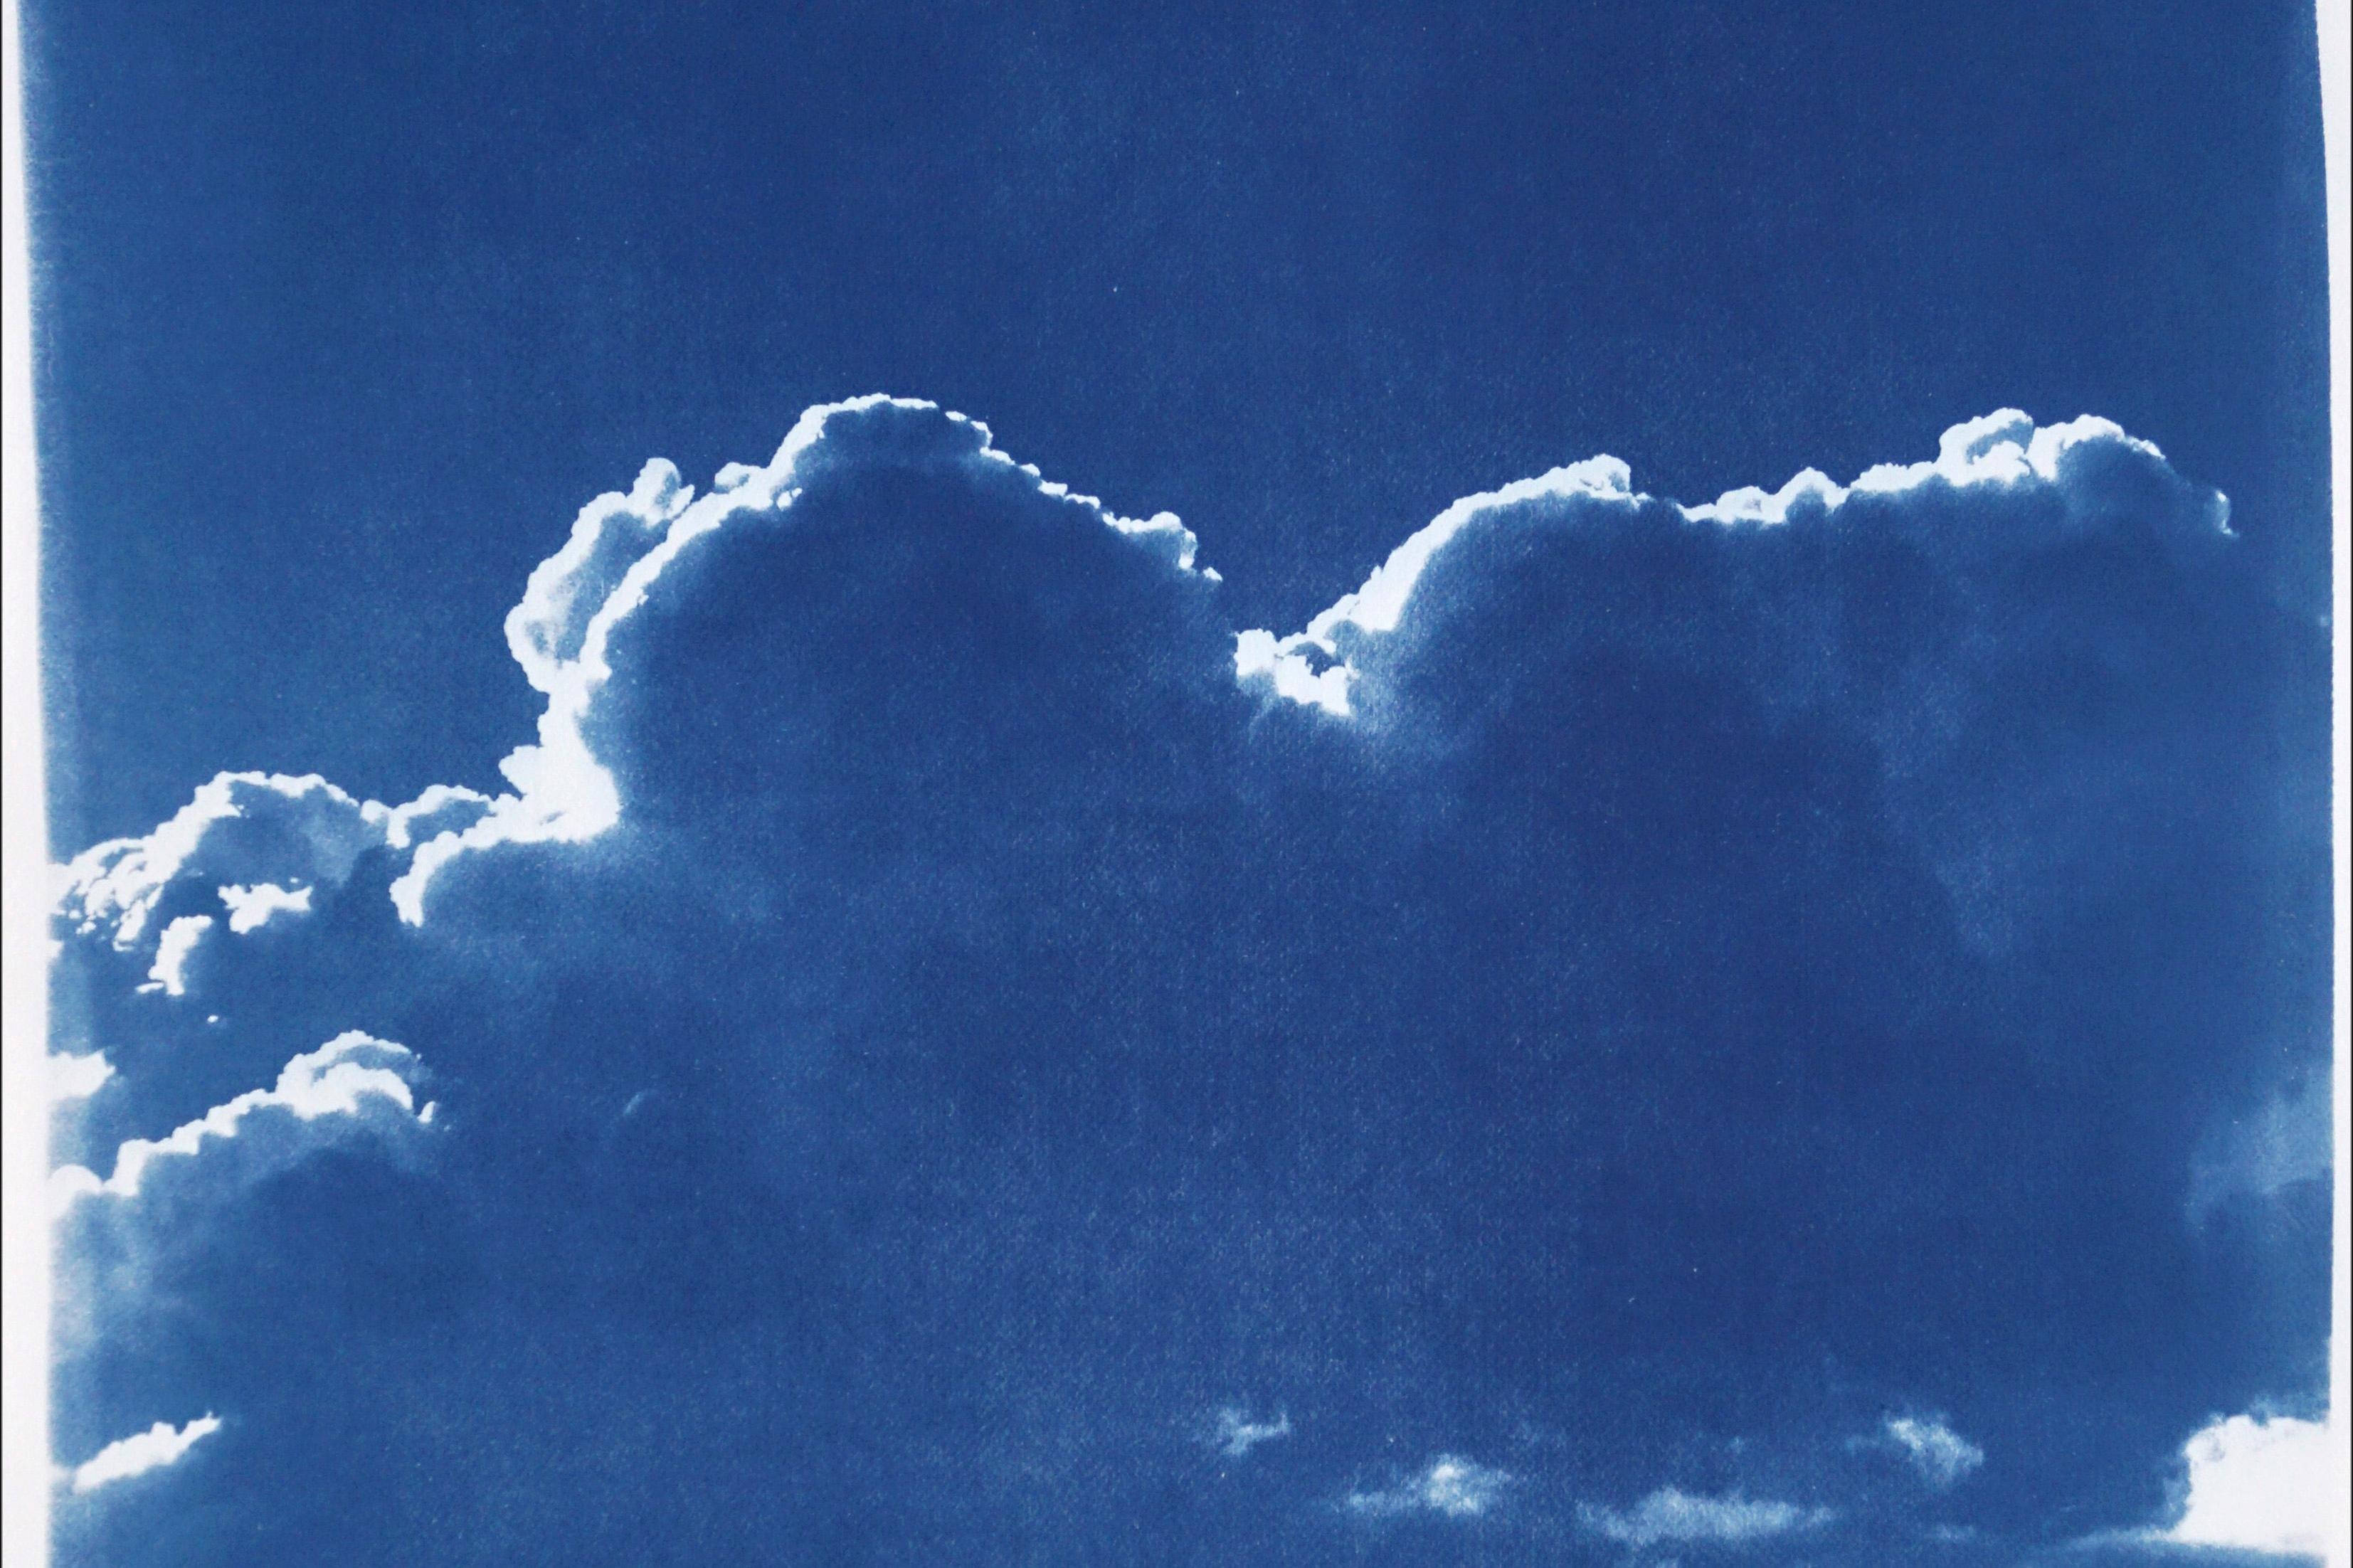 Blue Tones Triptych of Serene Cloudy Sky, Handmade Cyanotype Print on Paper 2021 5